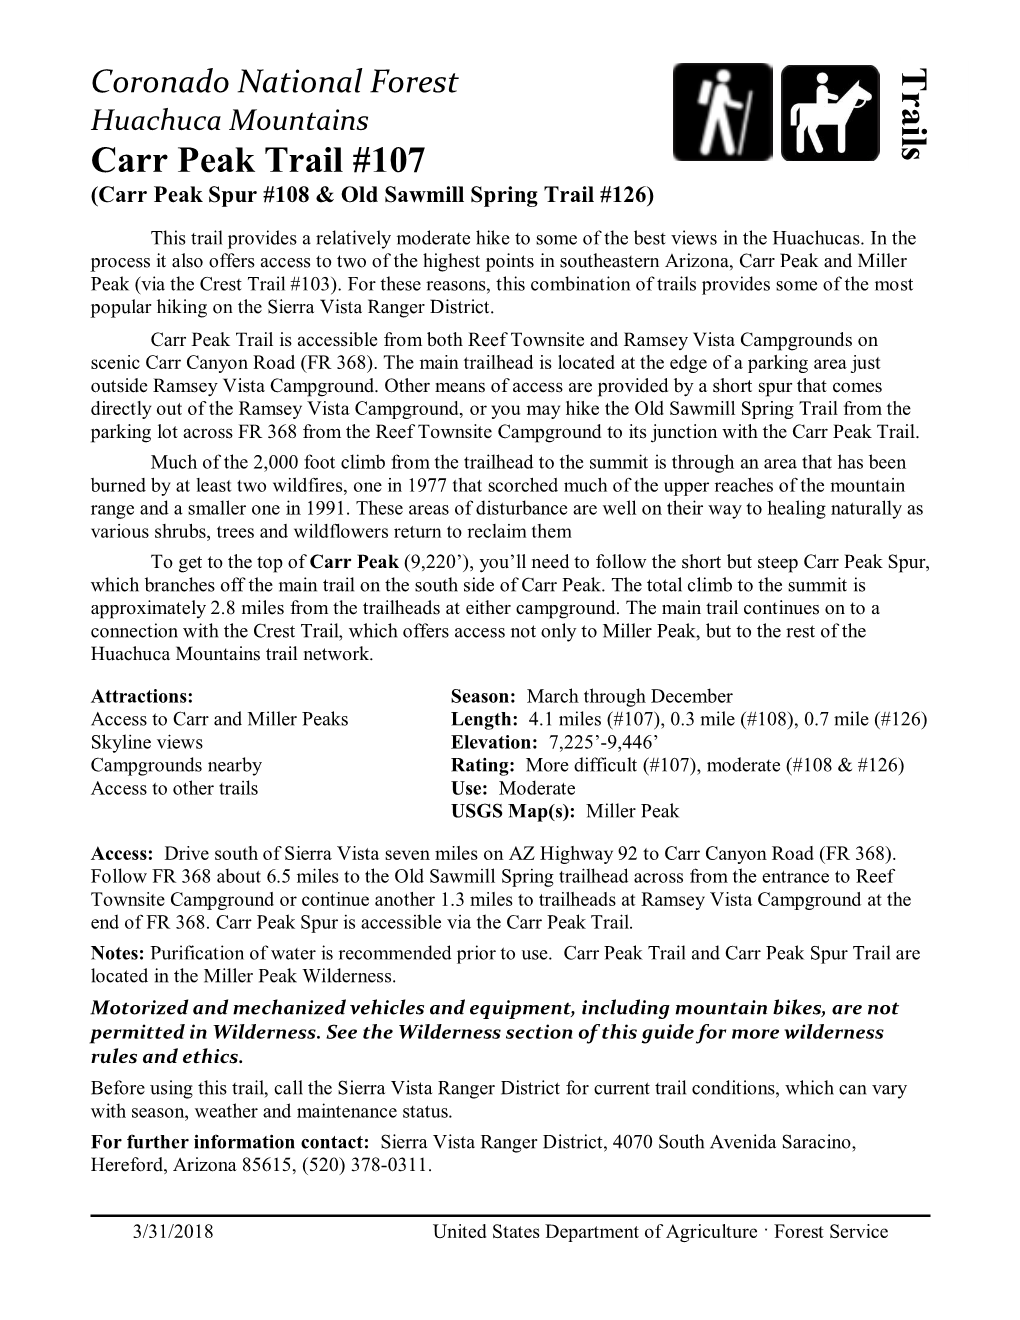 Carr Peak Trail #107 T Rails